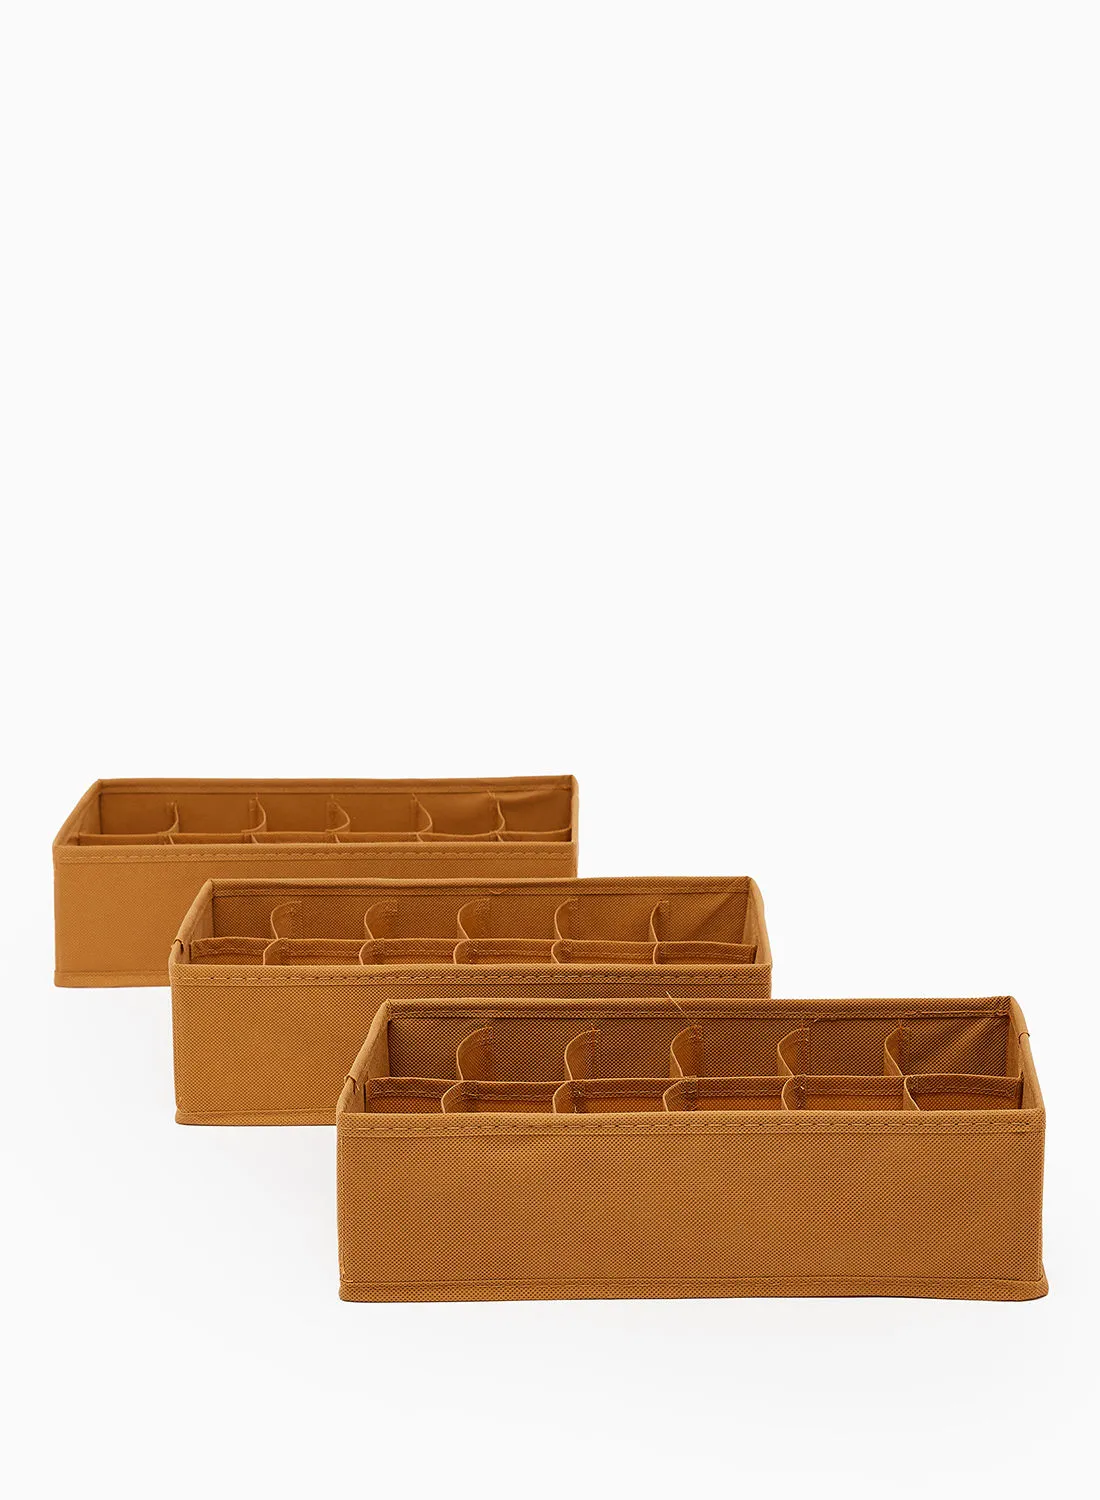 Amal 12 Compartment Divider 3 Pack Foldable Storage Organizer Basics Bra And Undergarment Dresser Organizers Yellowish-Brown 33X9X17cm